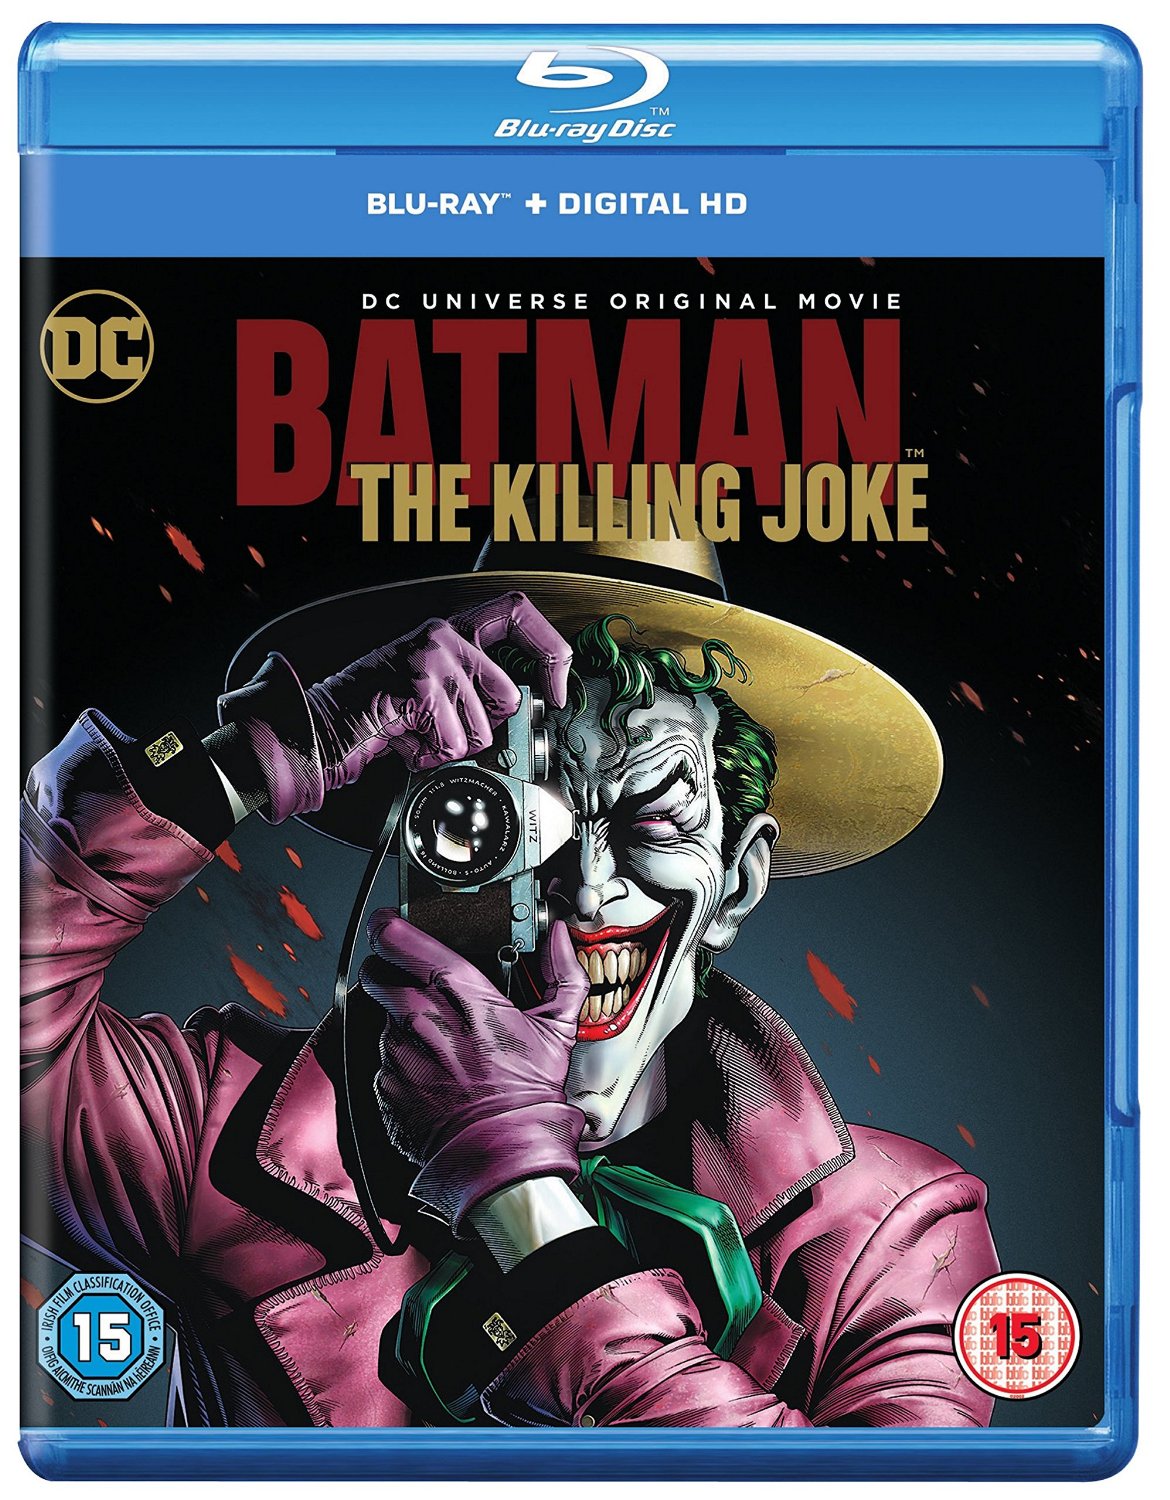 Batman The Killing Joke Blu-ray review